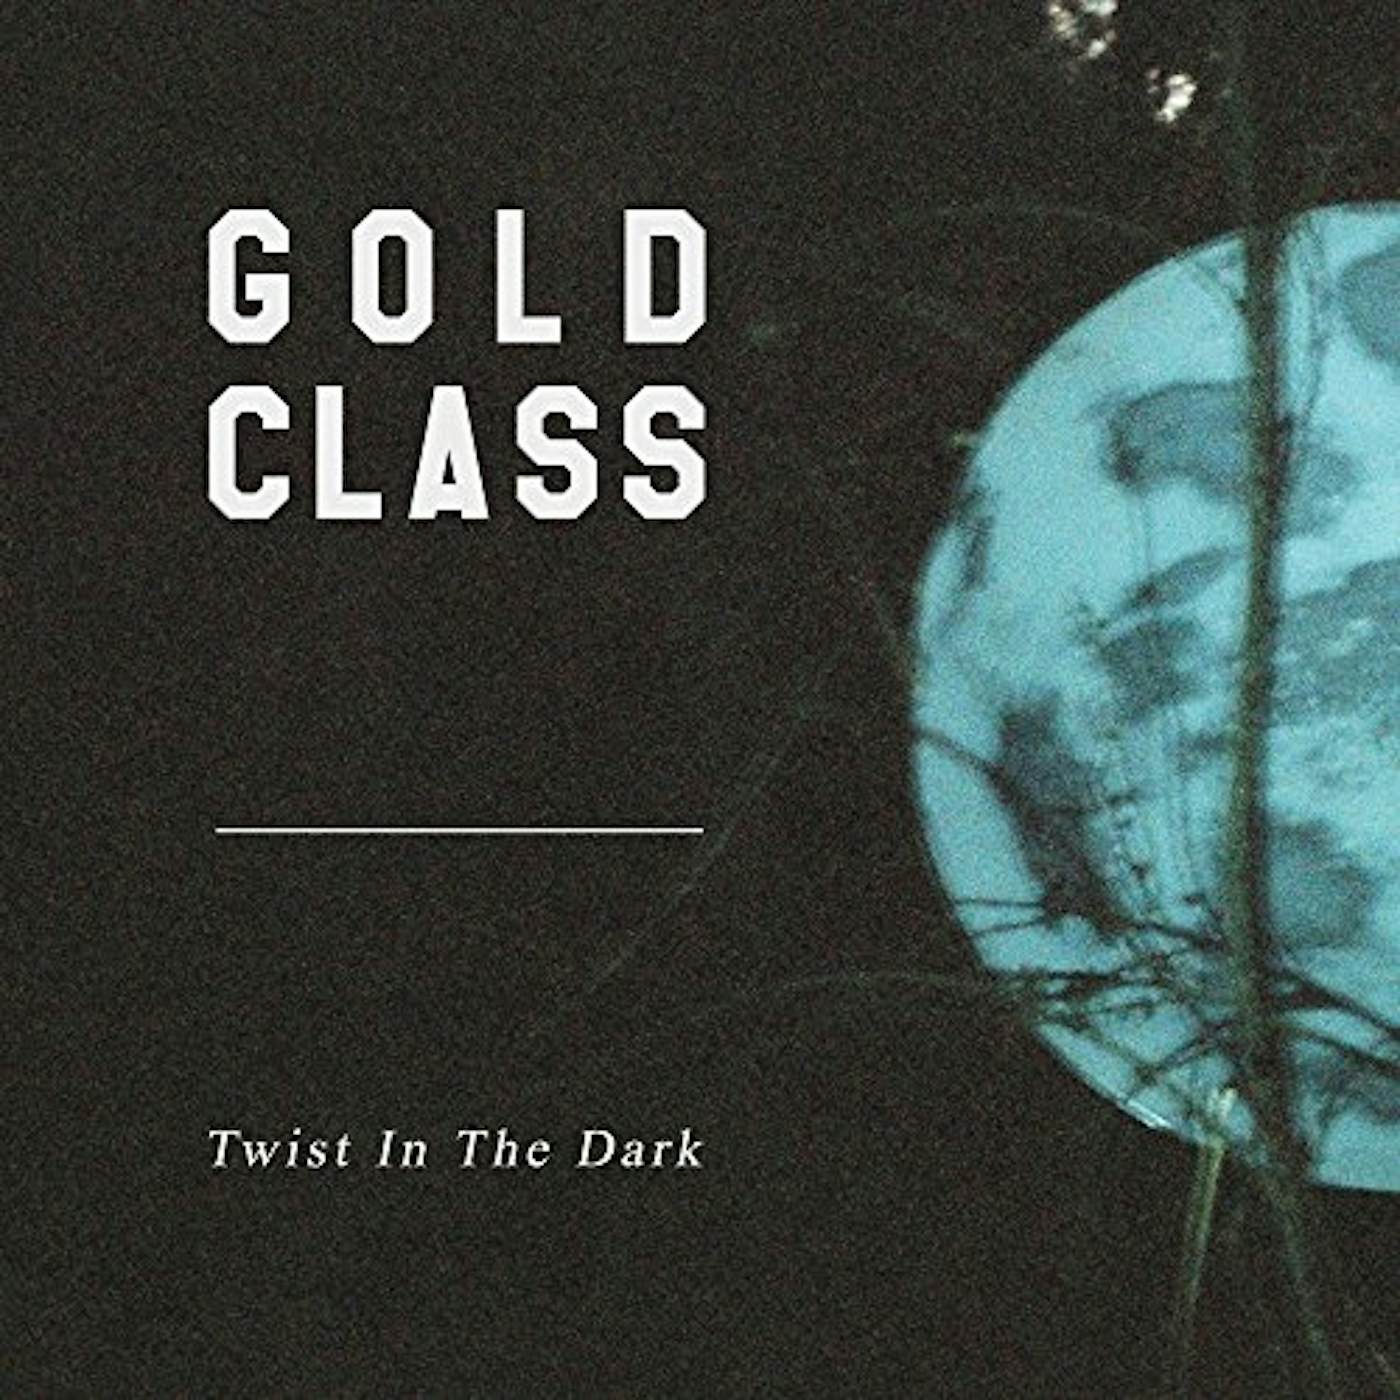 Gold Class Twist in the Dark Vinyl Record